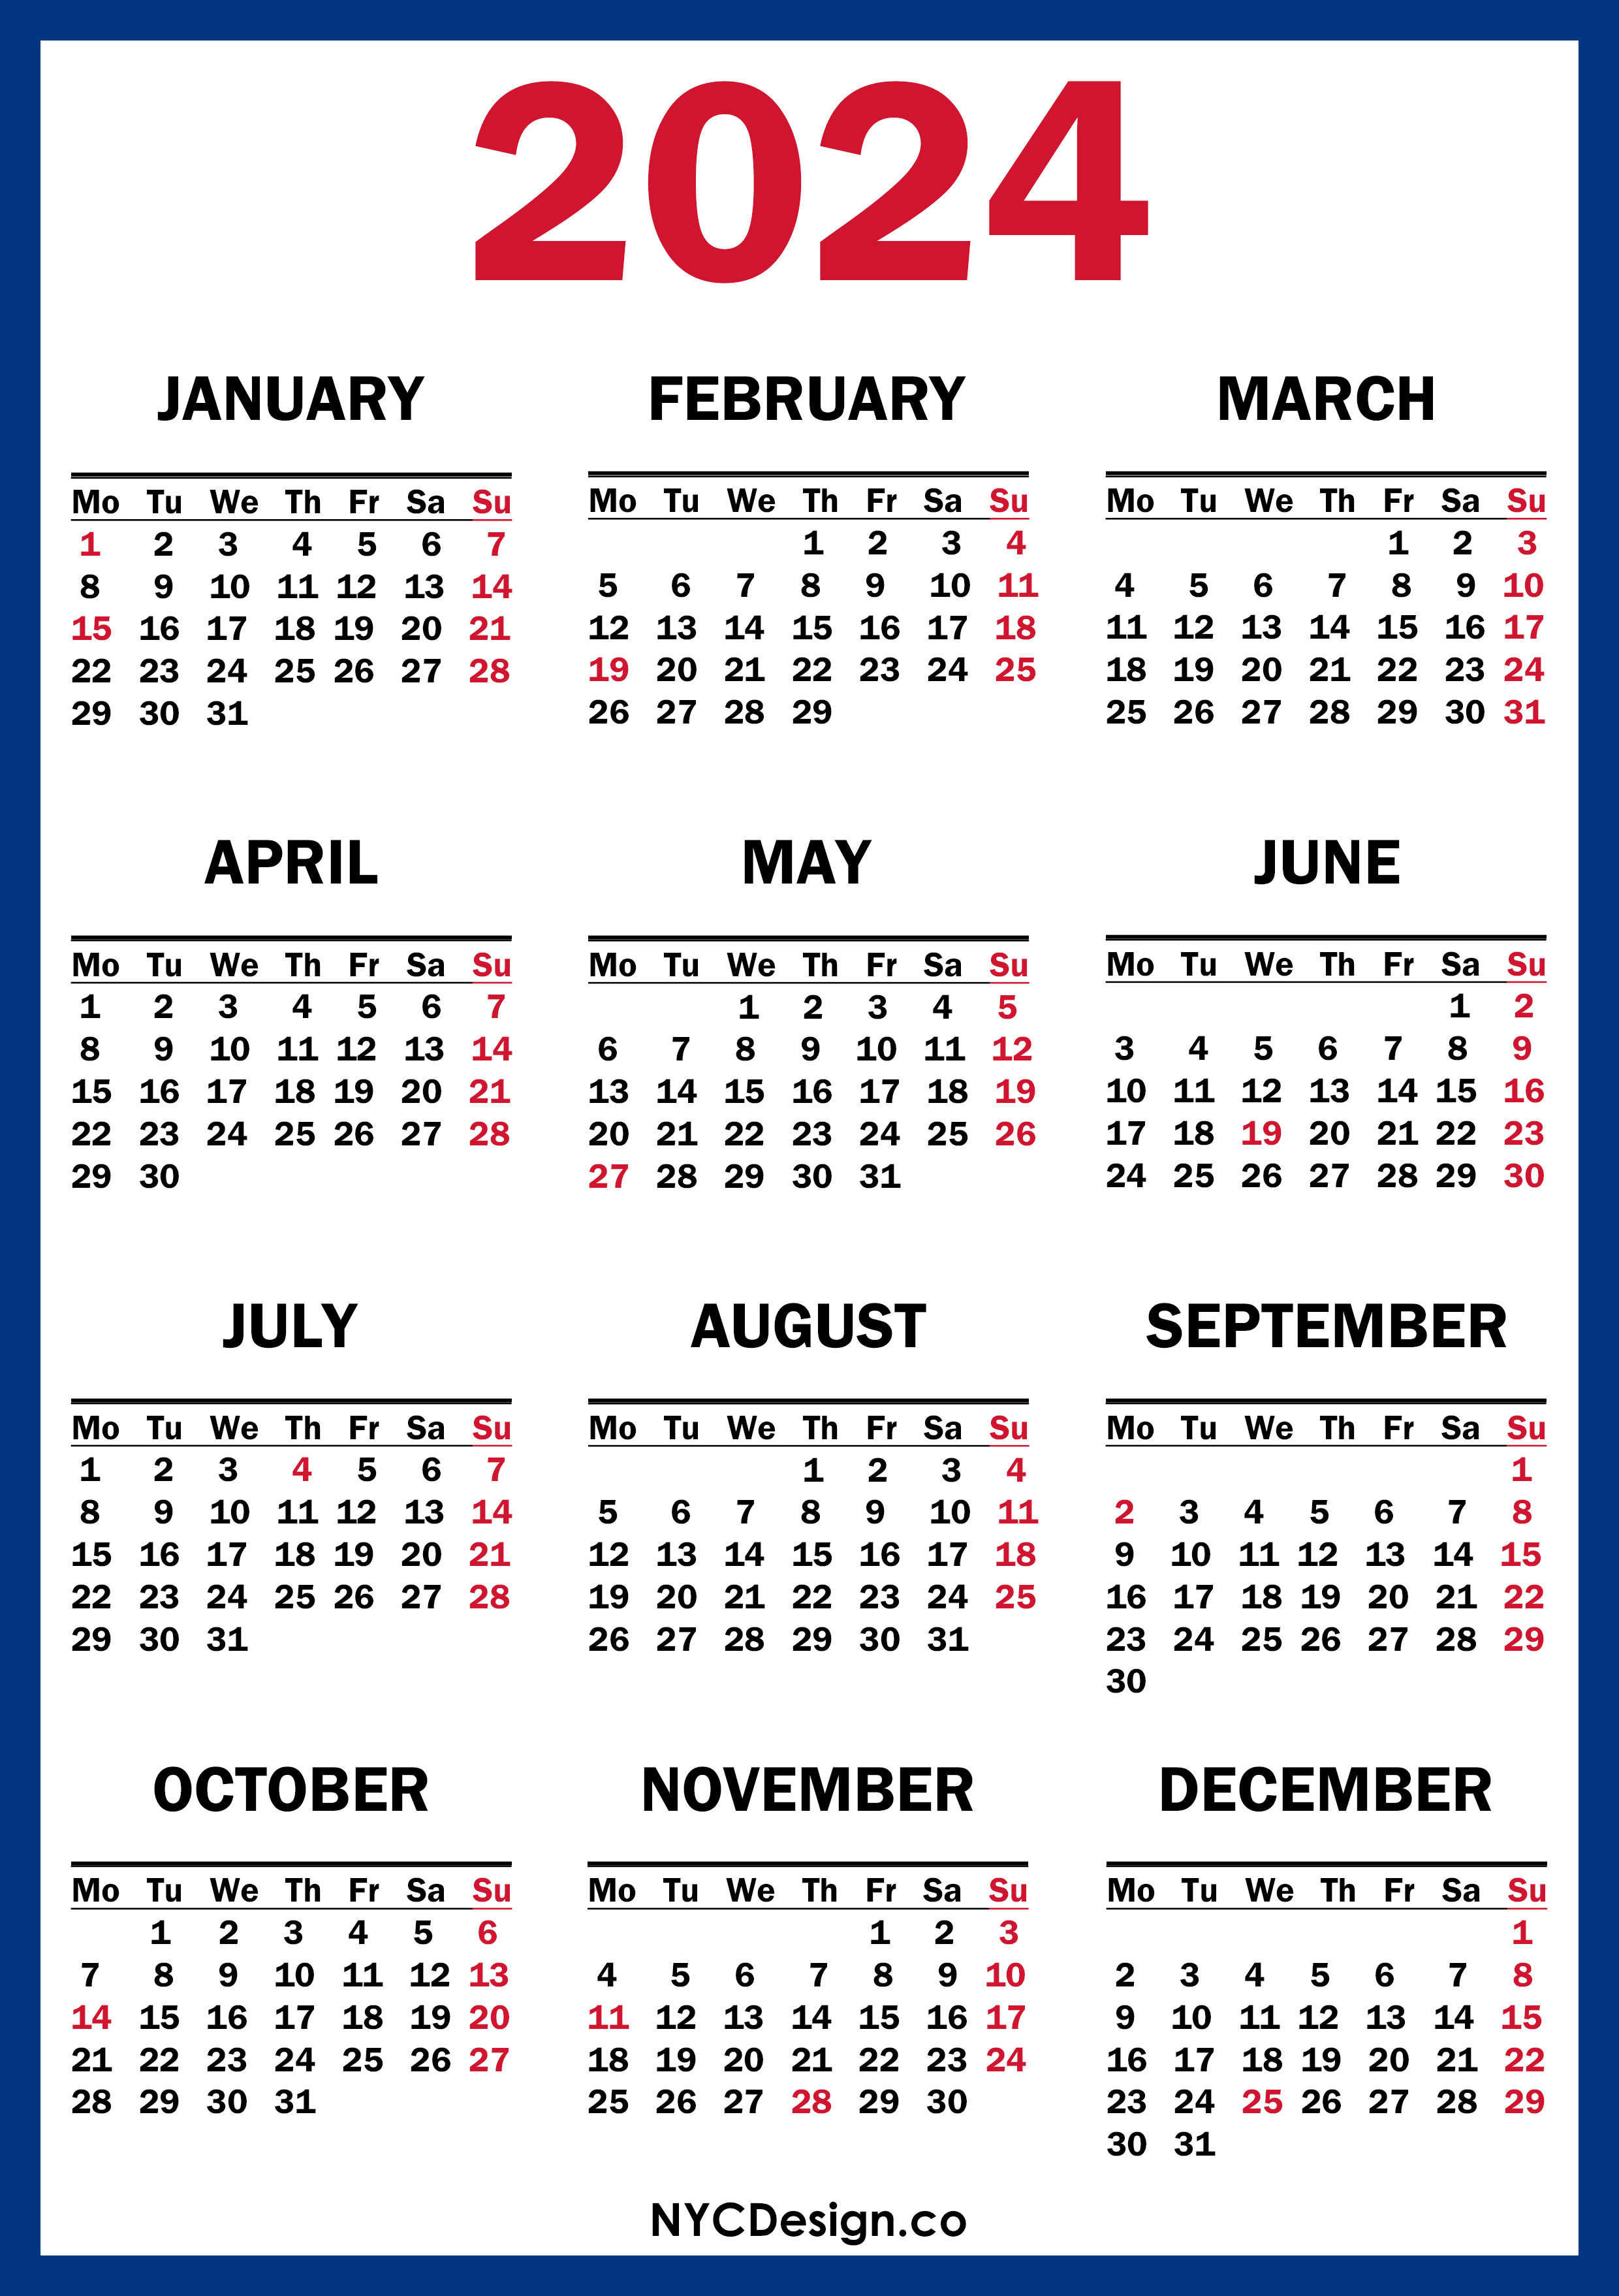 How To Create A Personalized 2024 Calendar With Holidays Adina Arabele